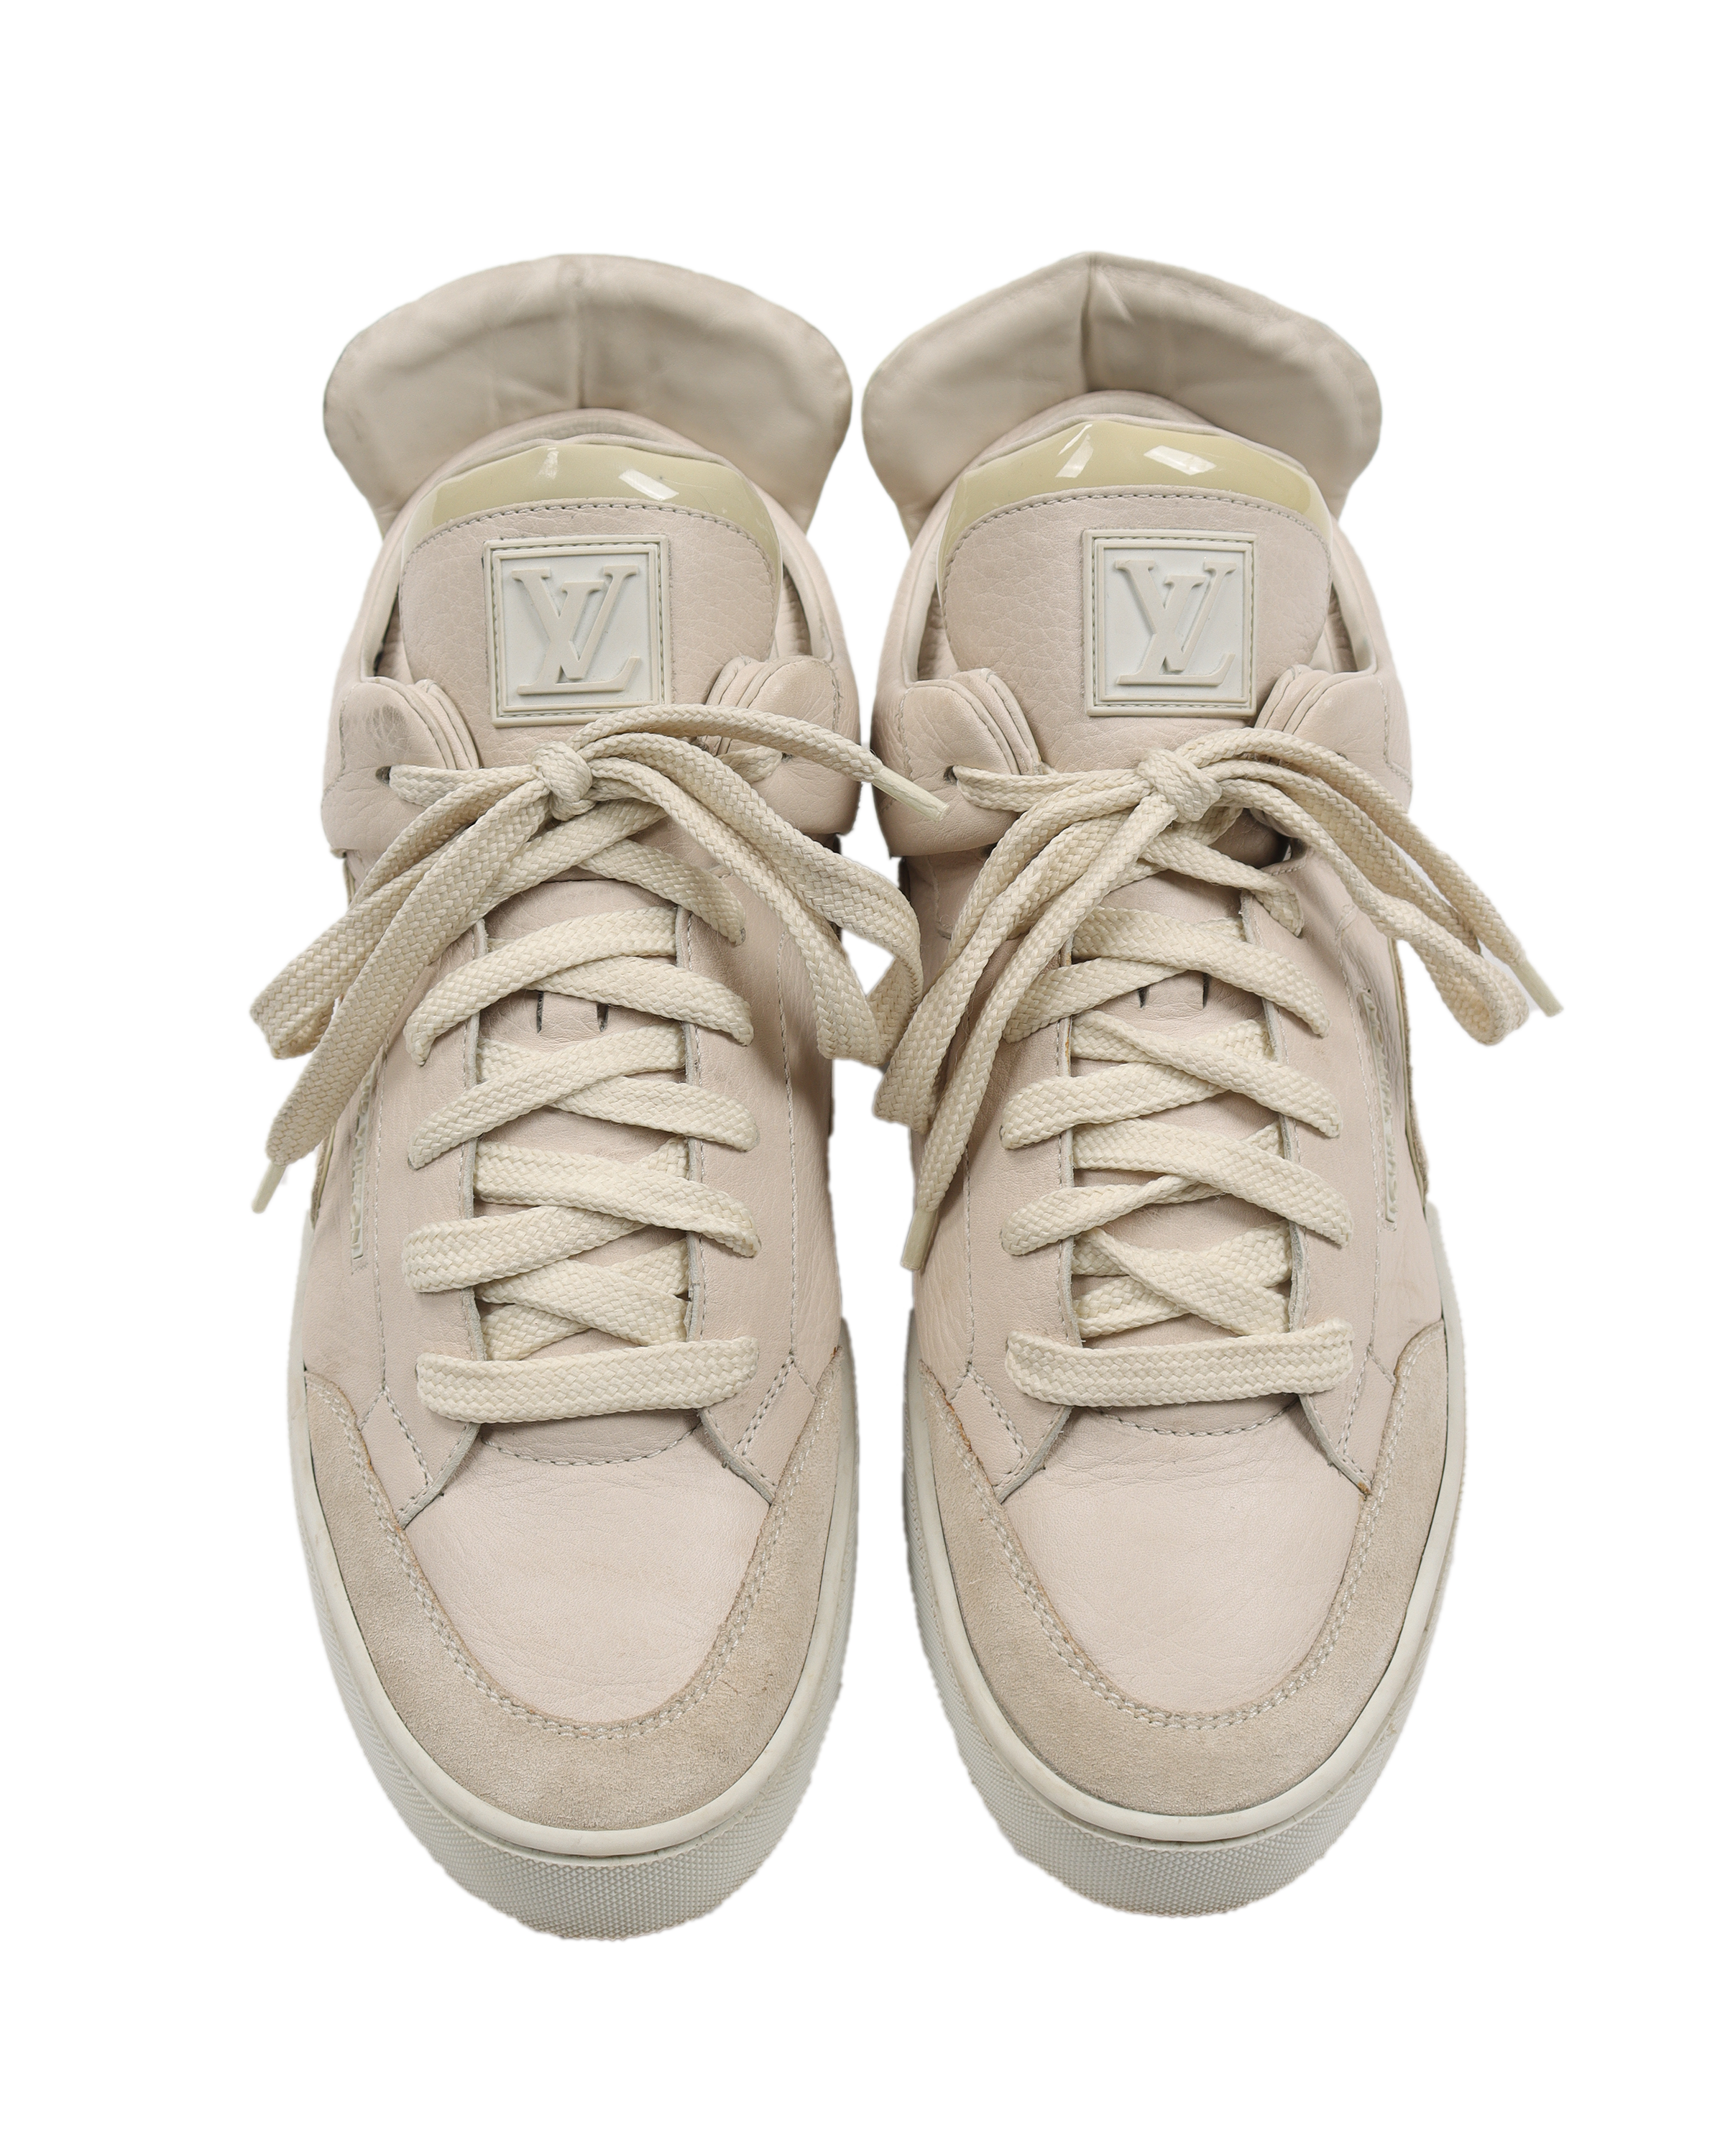 Kanye West X Louis Vuitton Don 'Cream' - Louis Vuitton - YP6U1PPC - cream